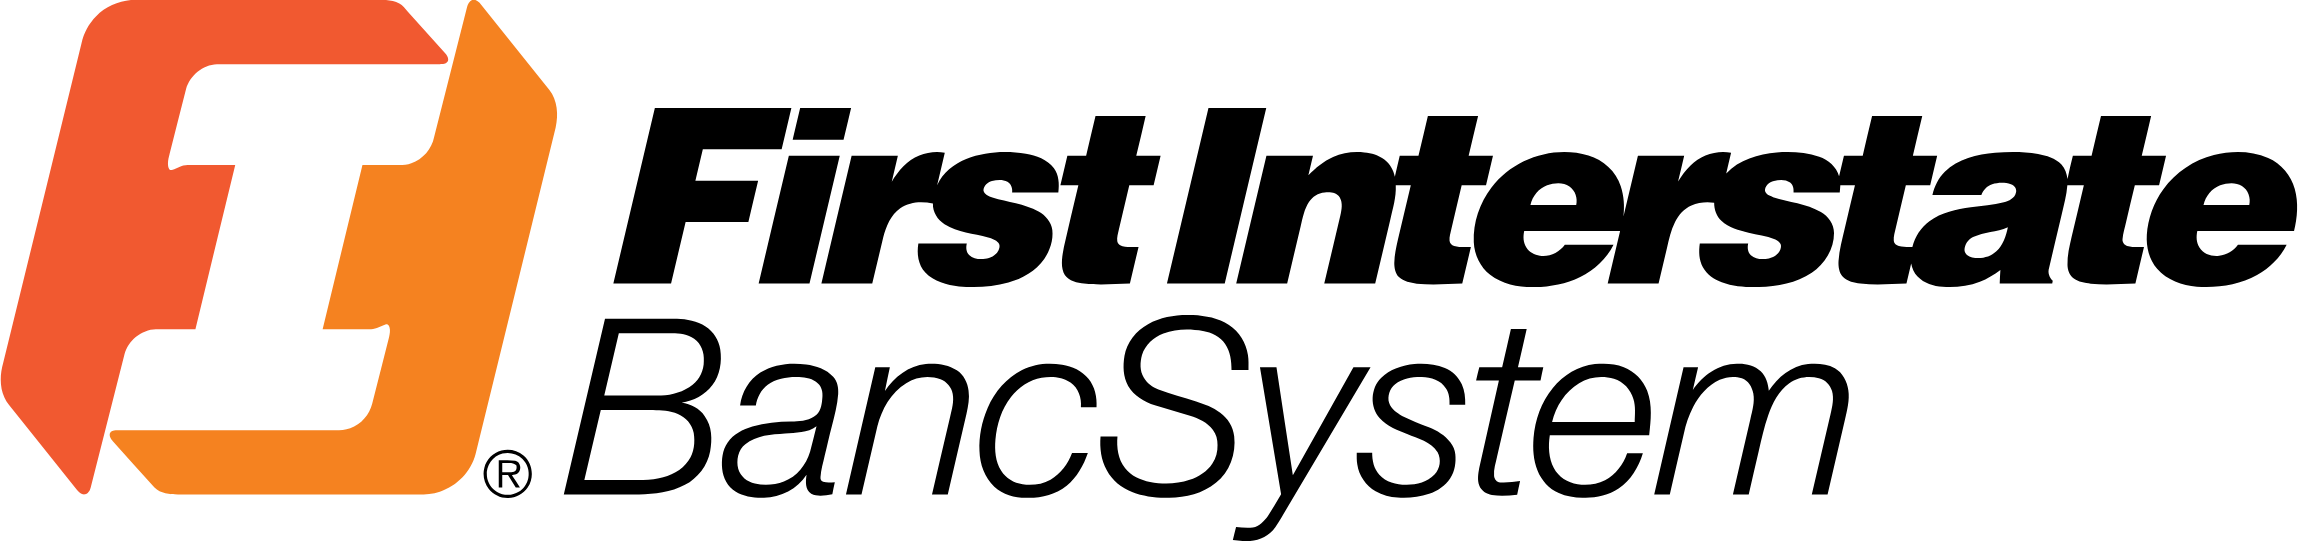 First Interstate BancSystem logo large (transparent PNG)